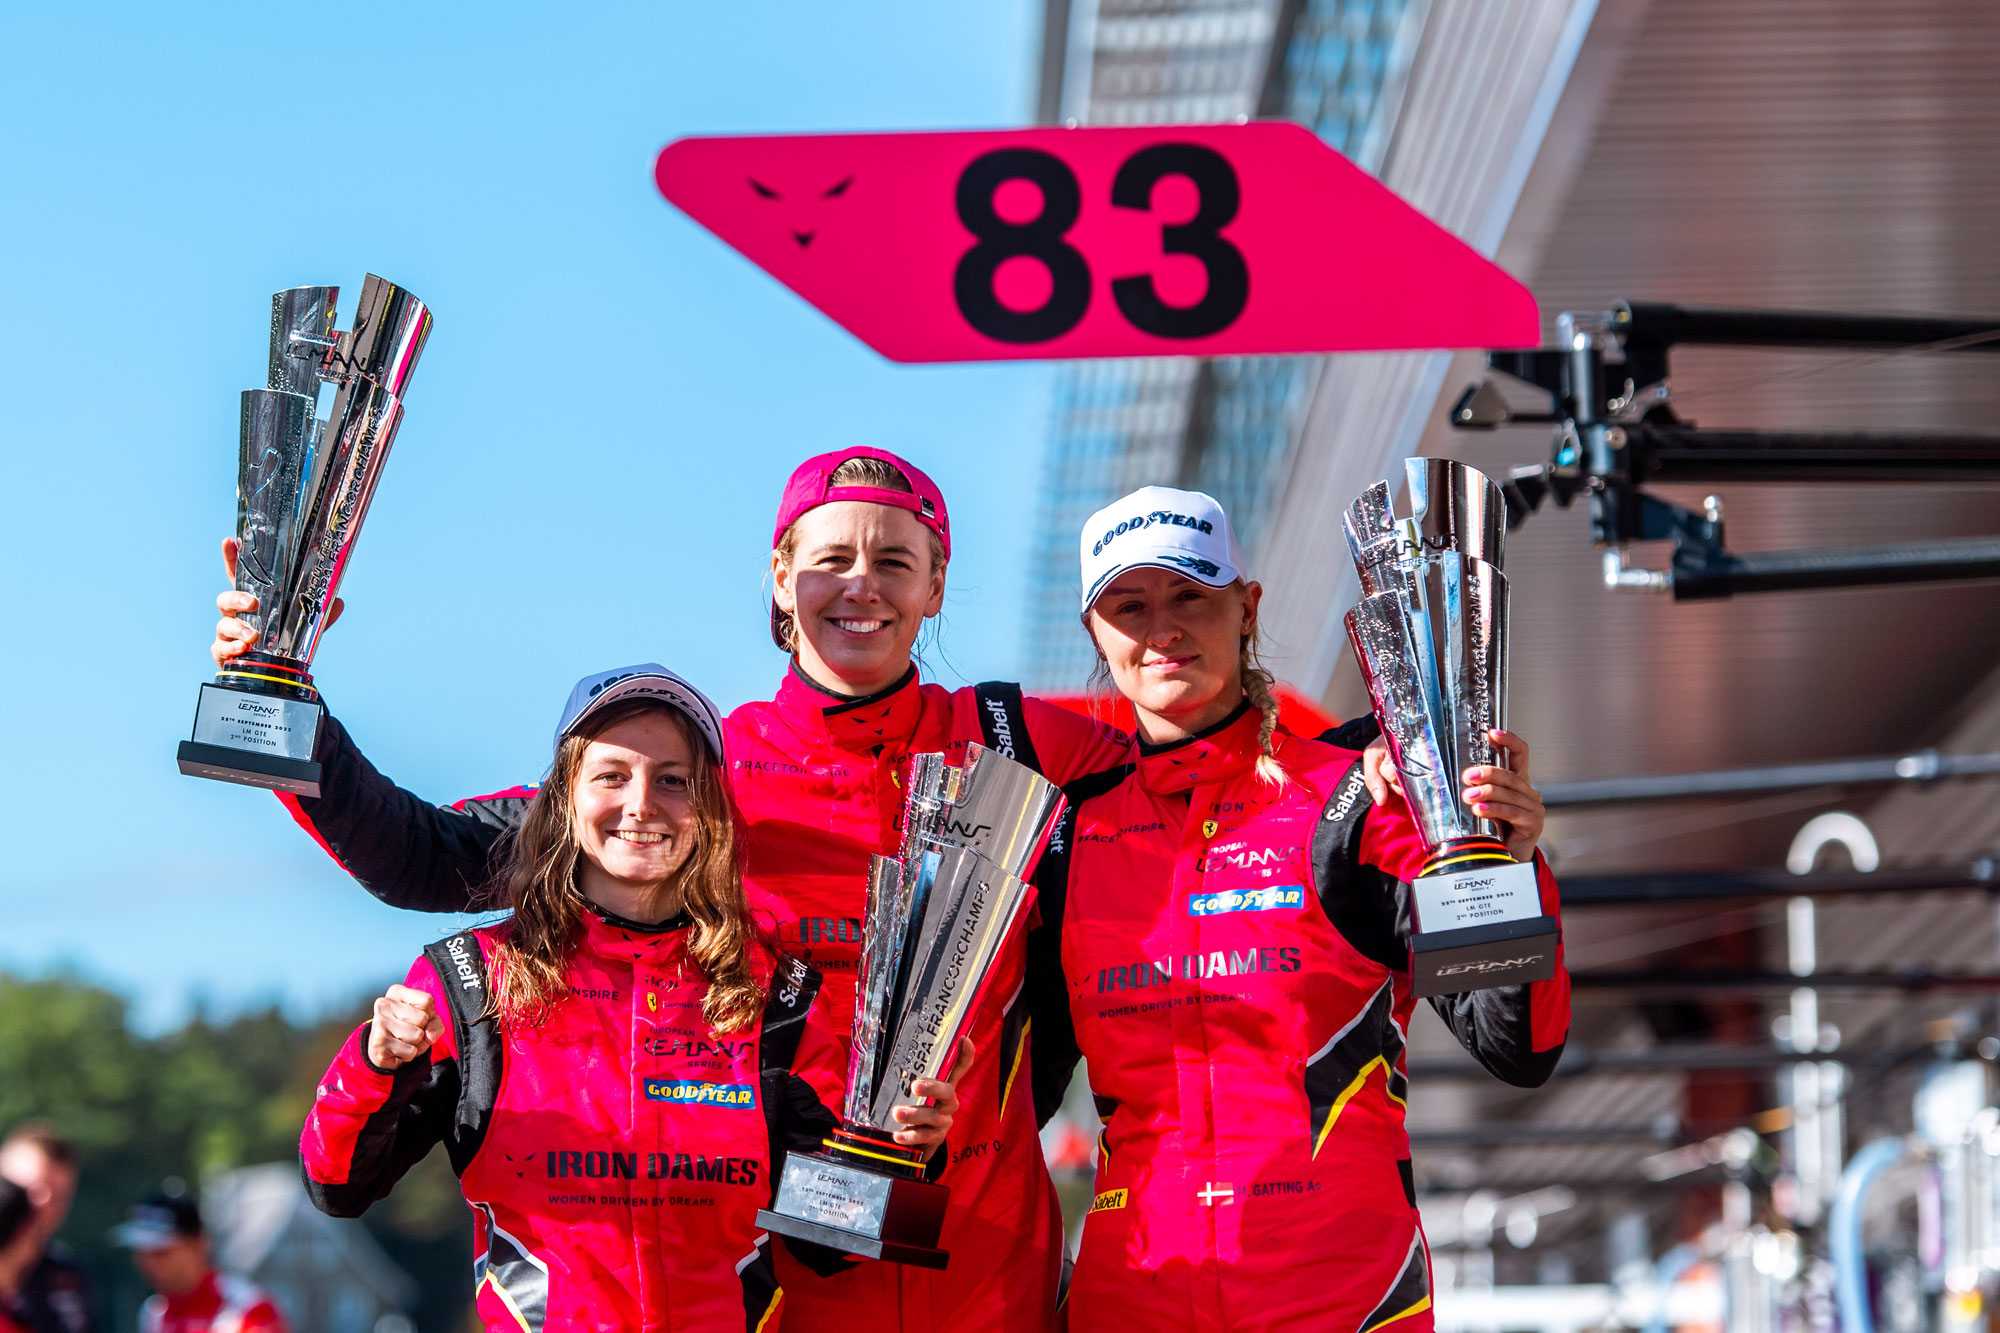 Iron Dames fahren in Spa-Francorchamps erneut auf das Podium